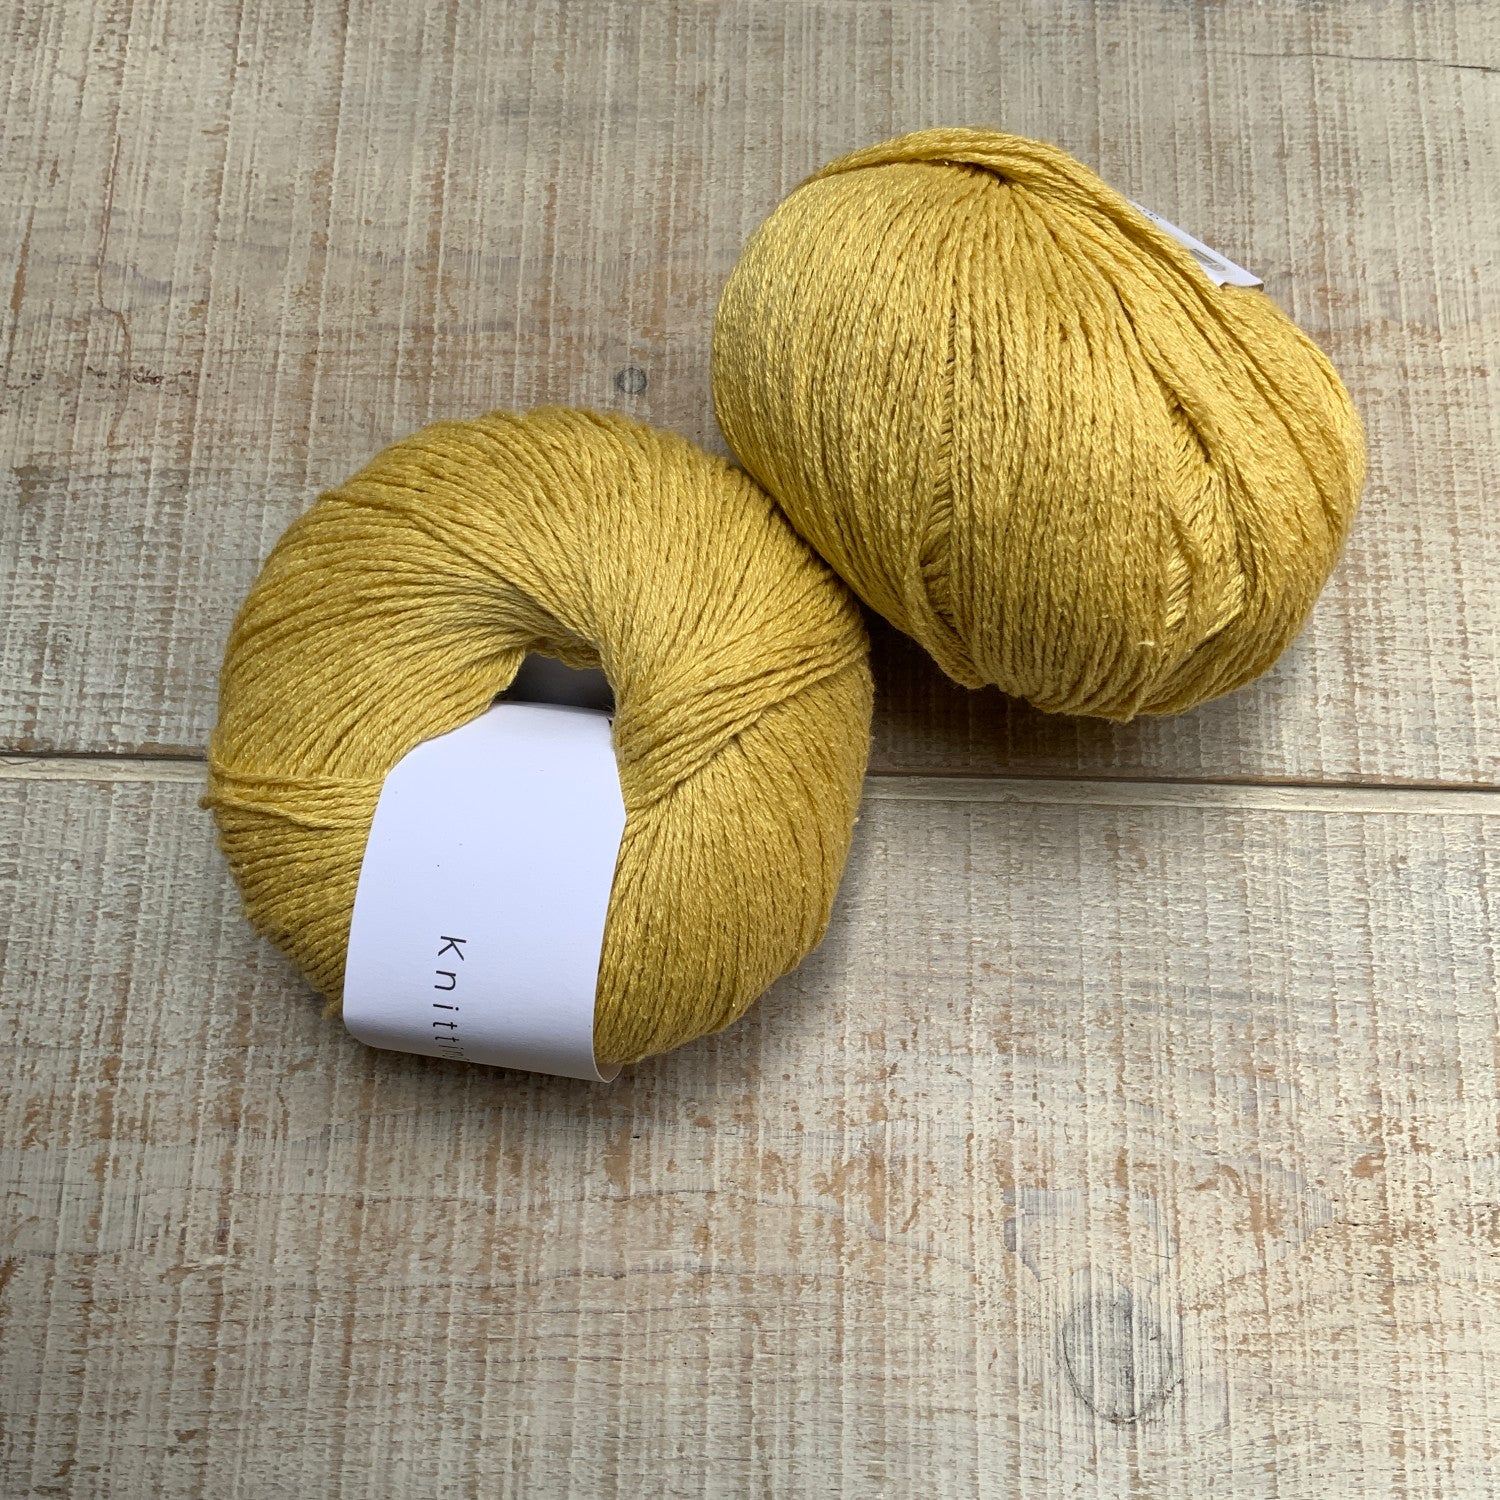 Knitting for Olive Pure Silk – The Yarn Club, Inc